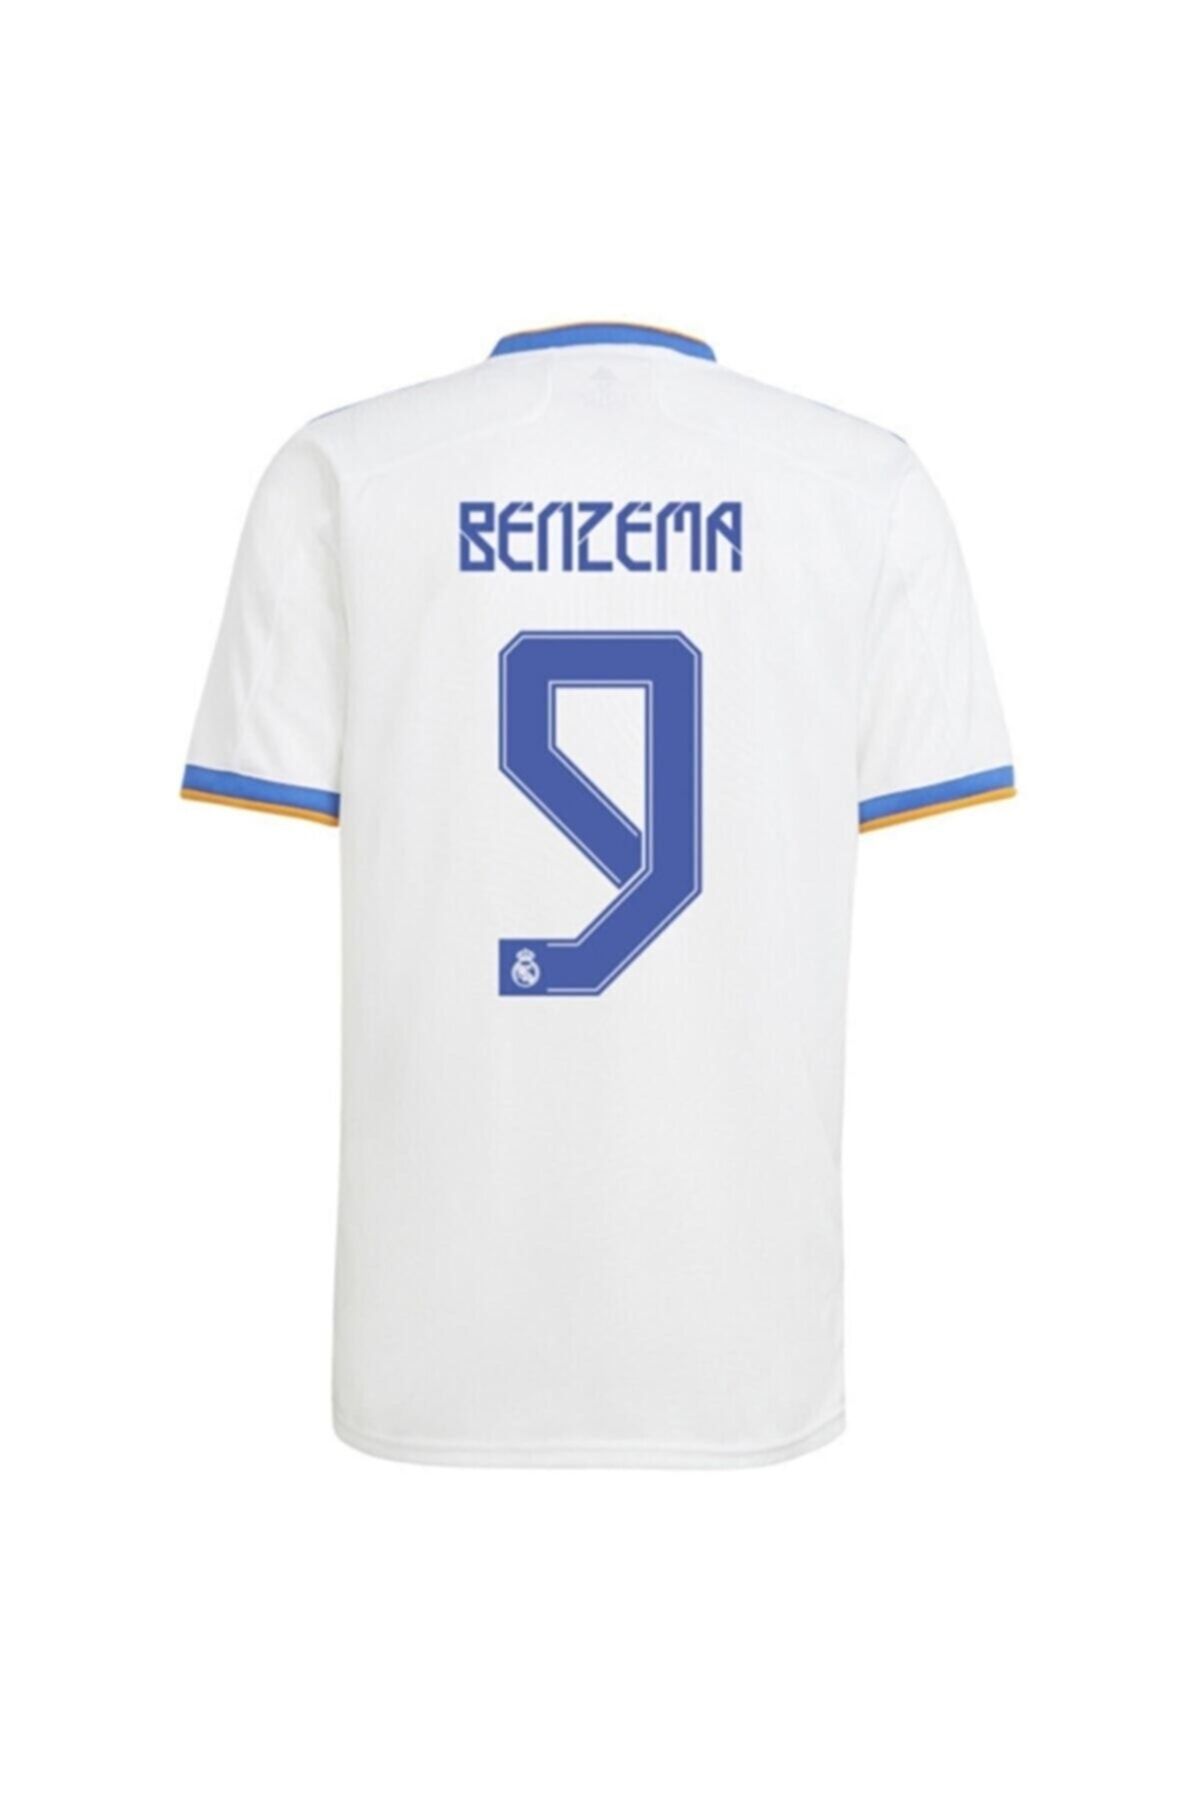 Pasxaspor Real Madrid Benzema 2021/2022 Iç Saha Forma Modeli